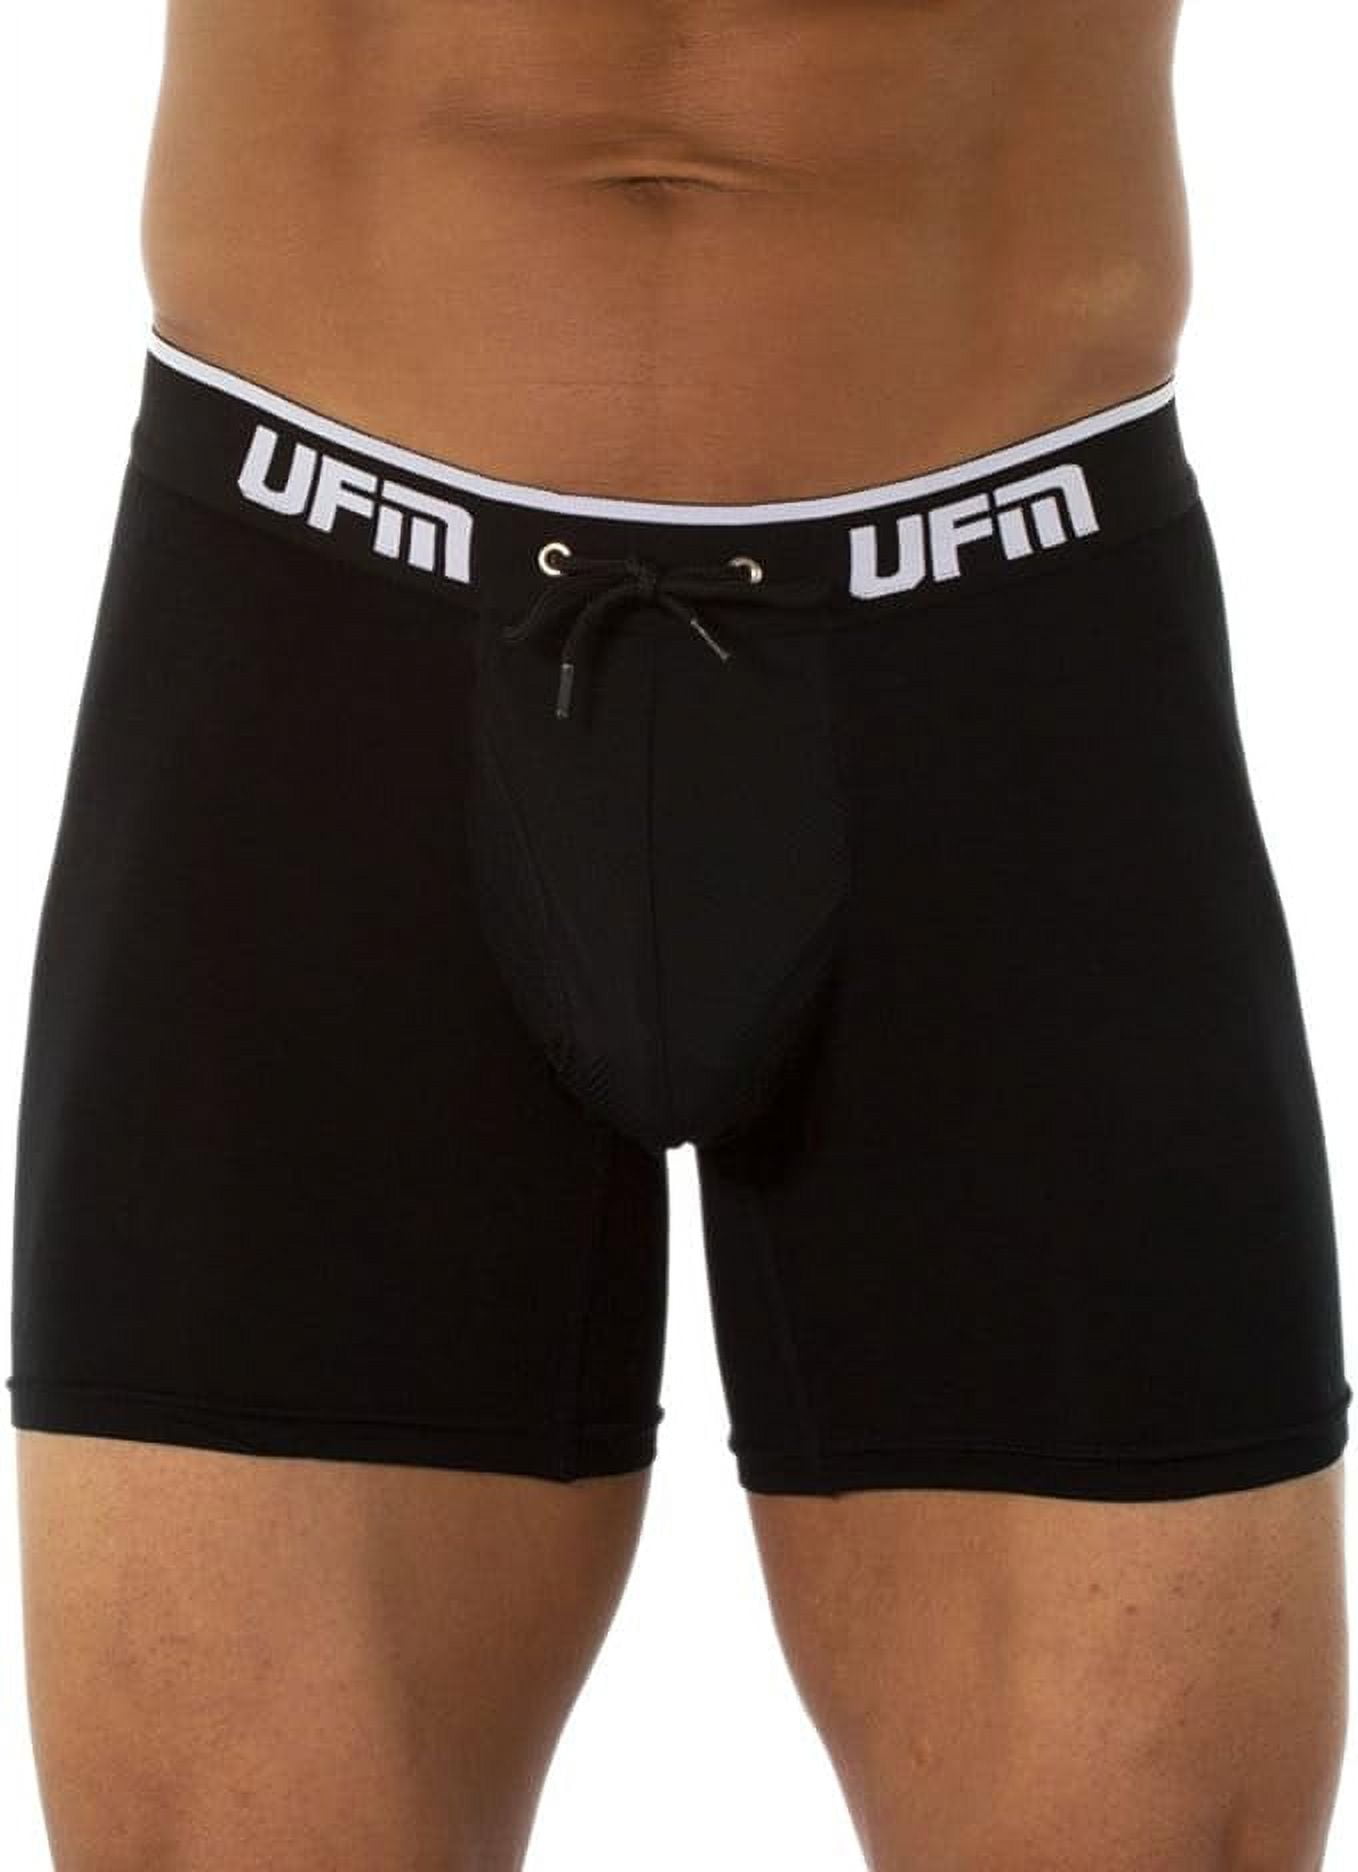 UFM Underwear: In-Depth Look at the Adjustable Pouch